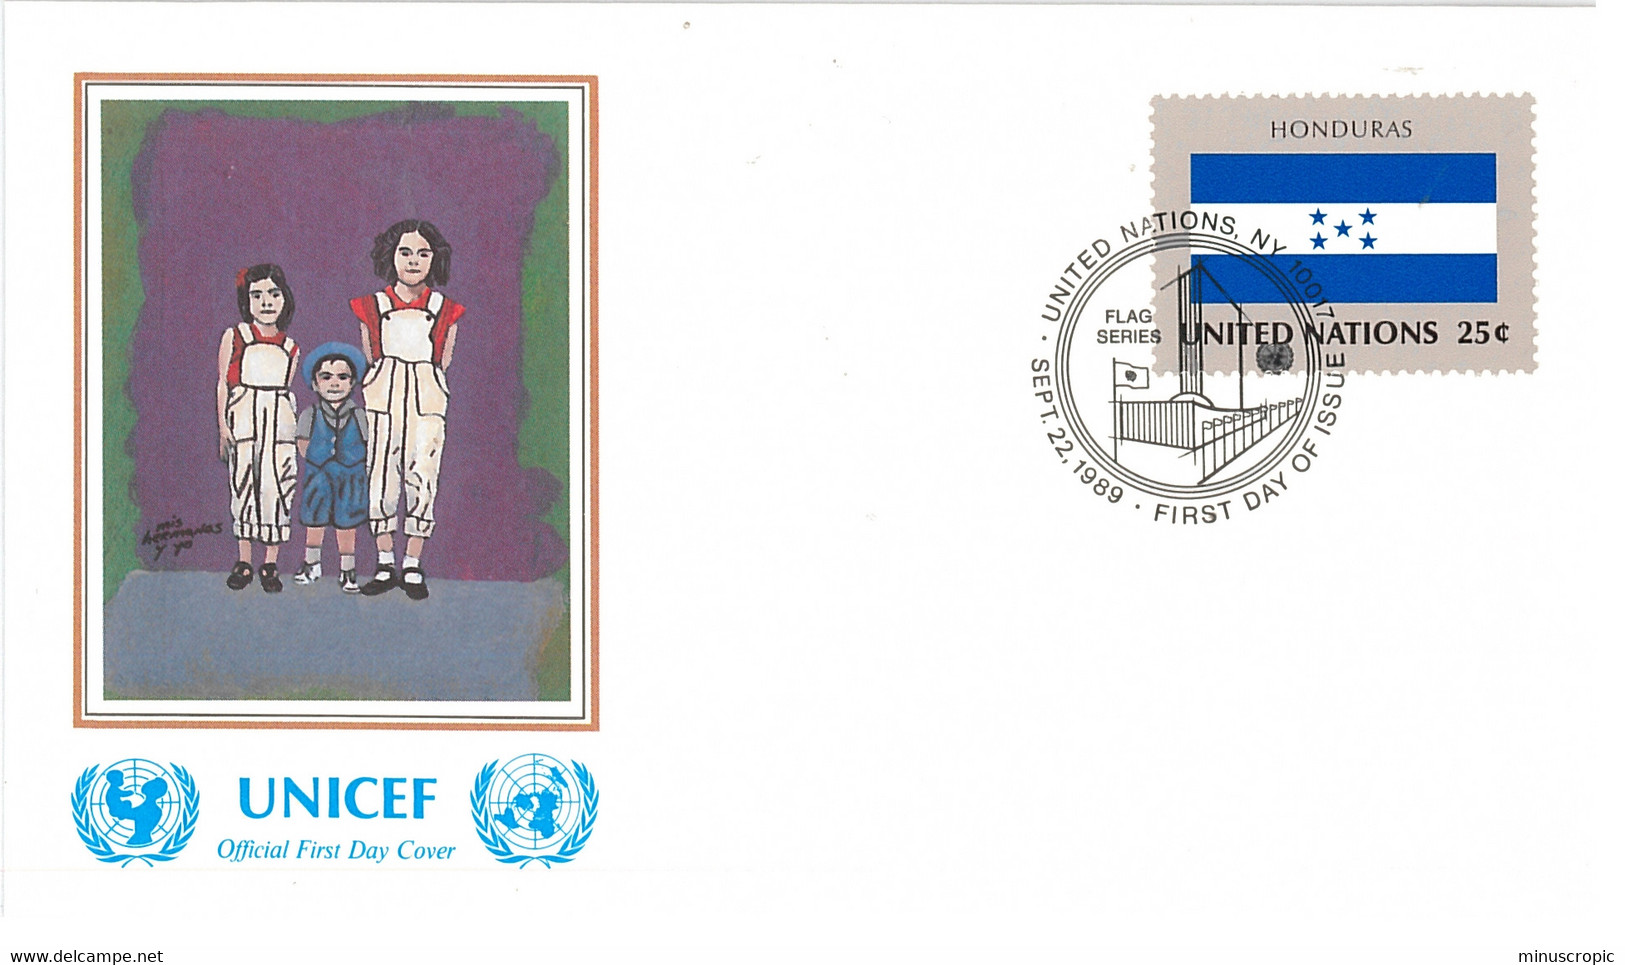 Enveloppe FDC United Nations - UNICEF - Flag Series 7/89 - Honduras - 1989 - Lettres & Documents